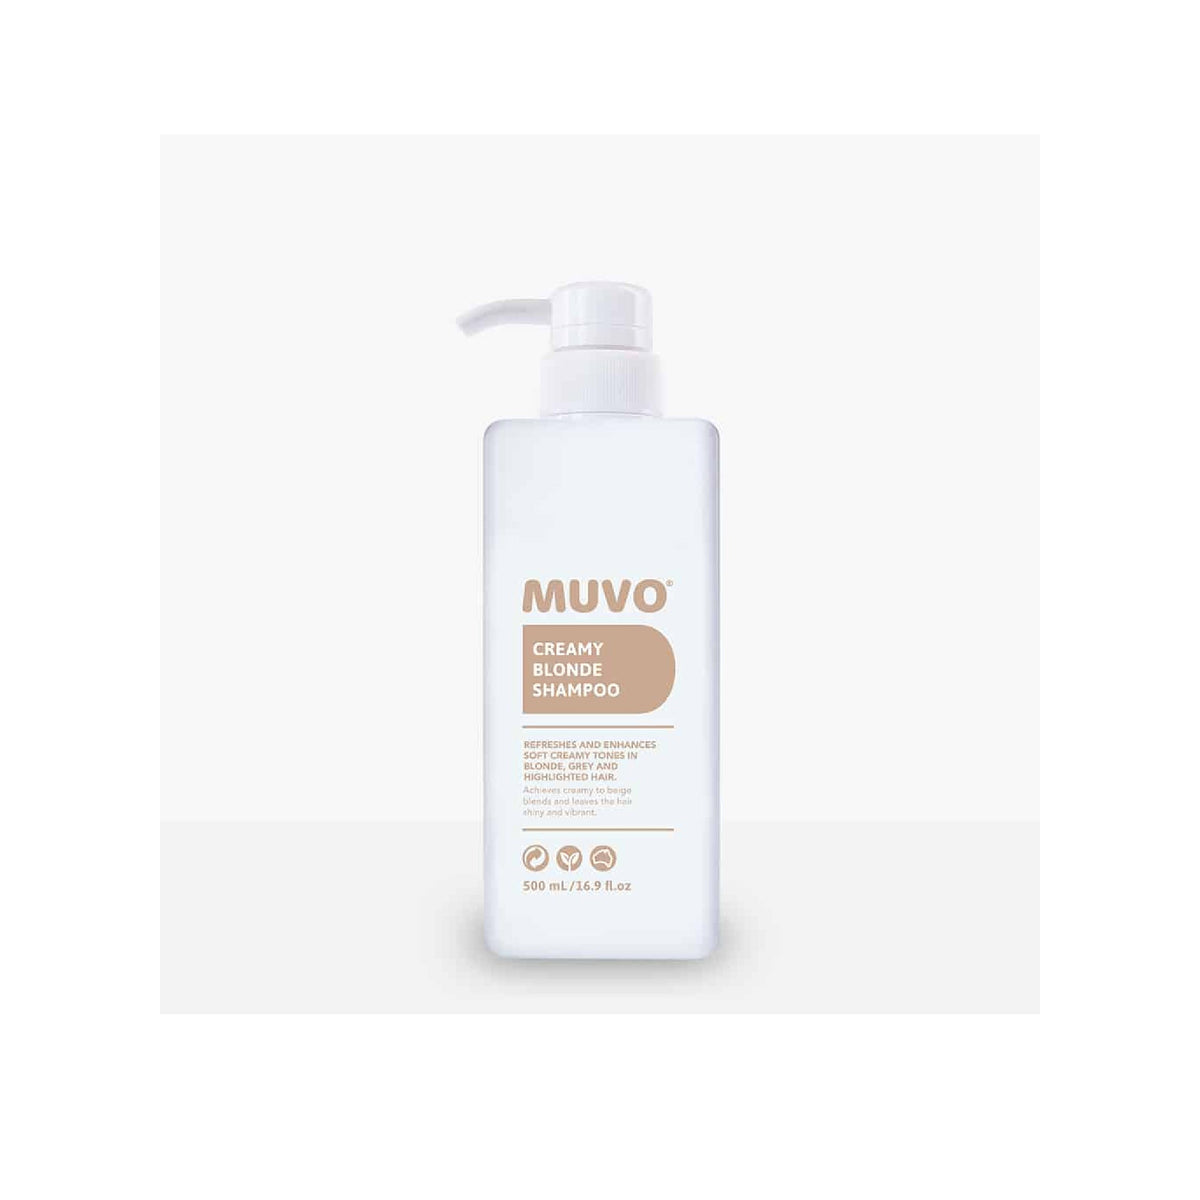 Muvo Creamy Blonde Shampoo - Haircare Superstore